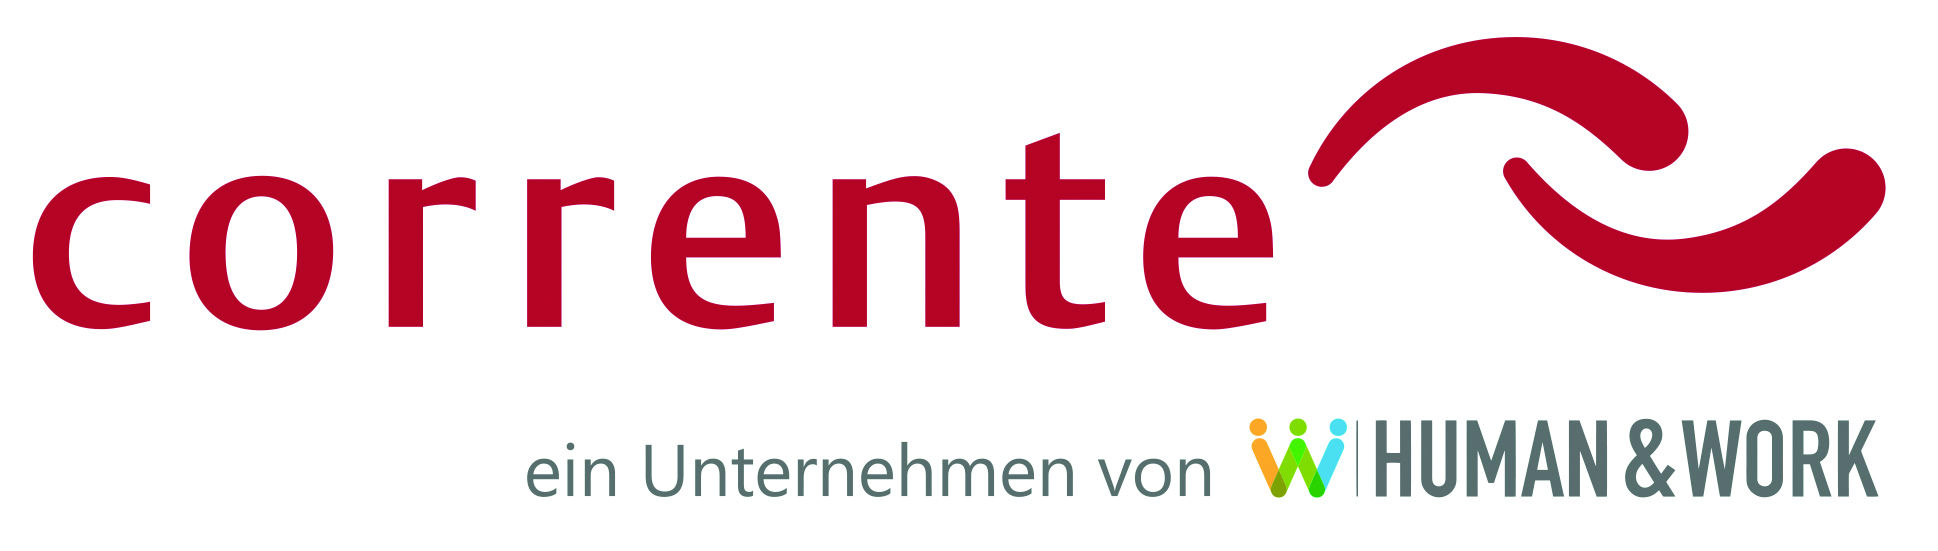 Corrente AG / Human & Work Logo